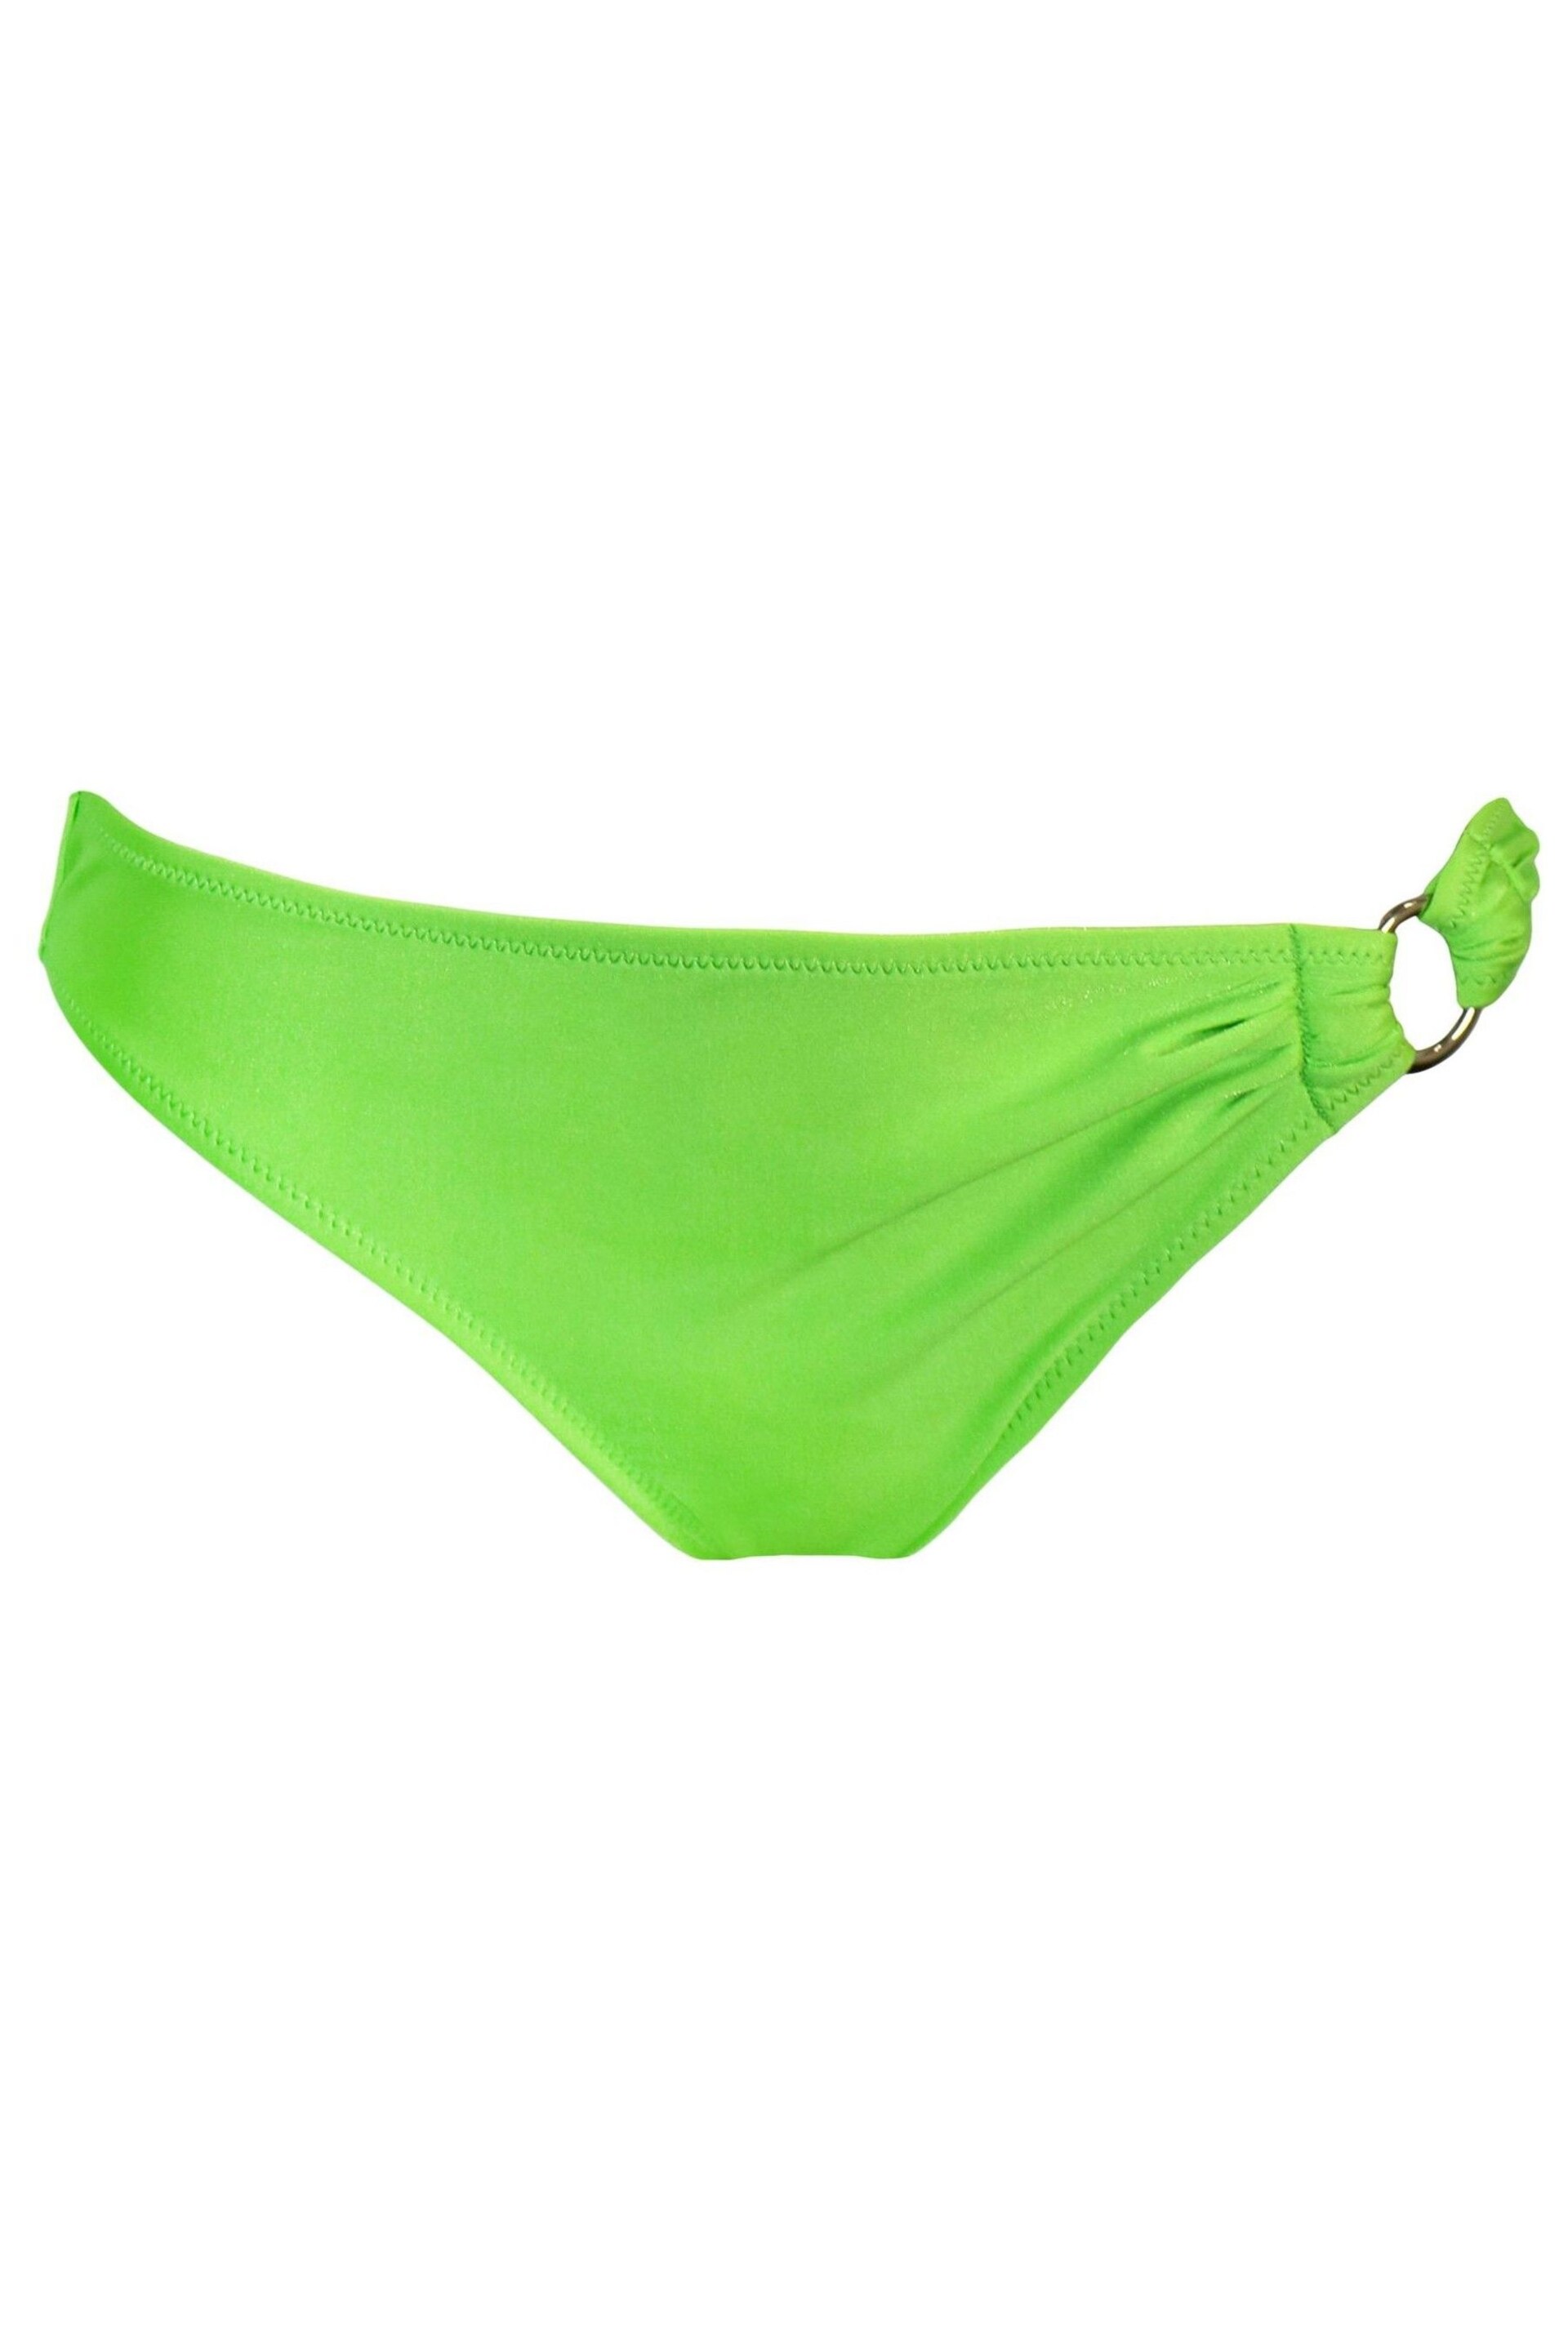 Pour Moi Green Samoa Ring Detail Bikini Bottoms - Image 3 of 4